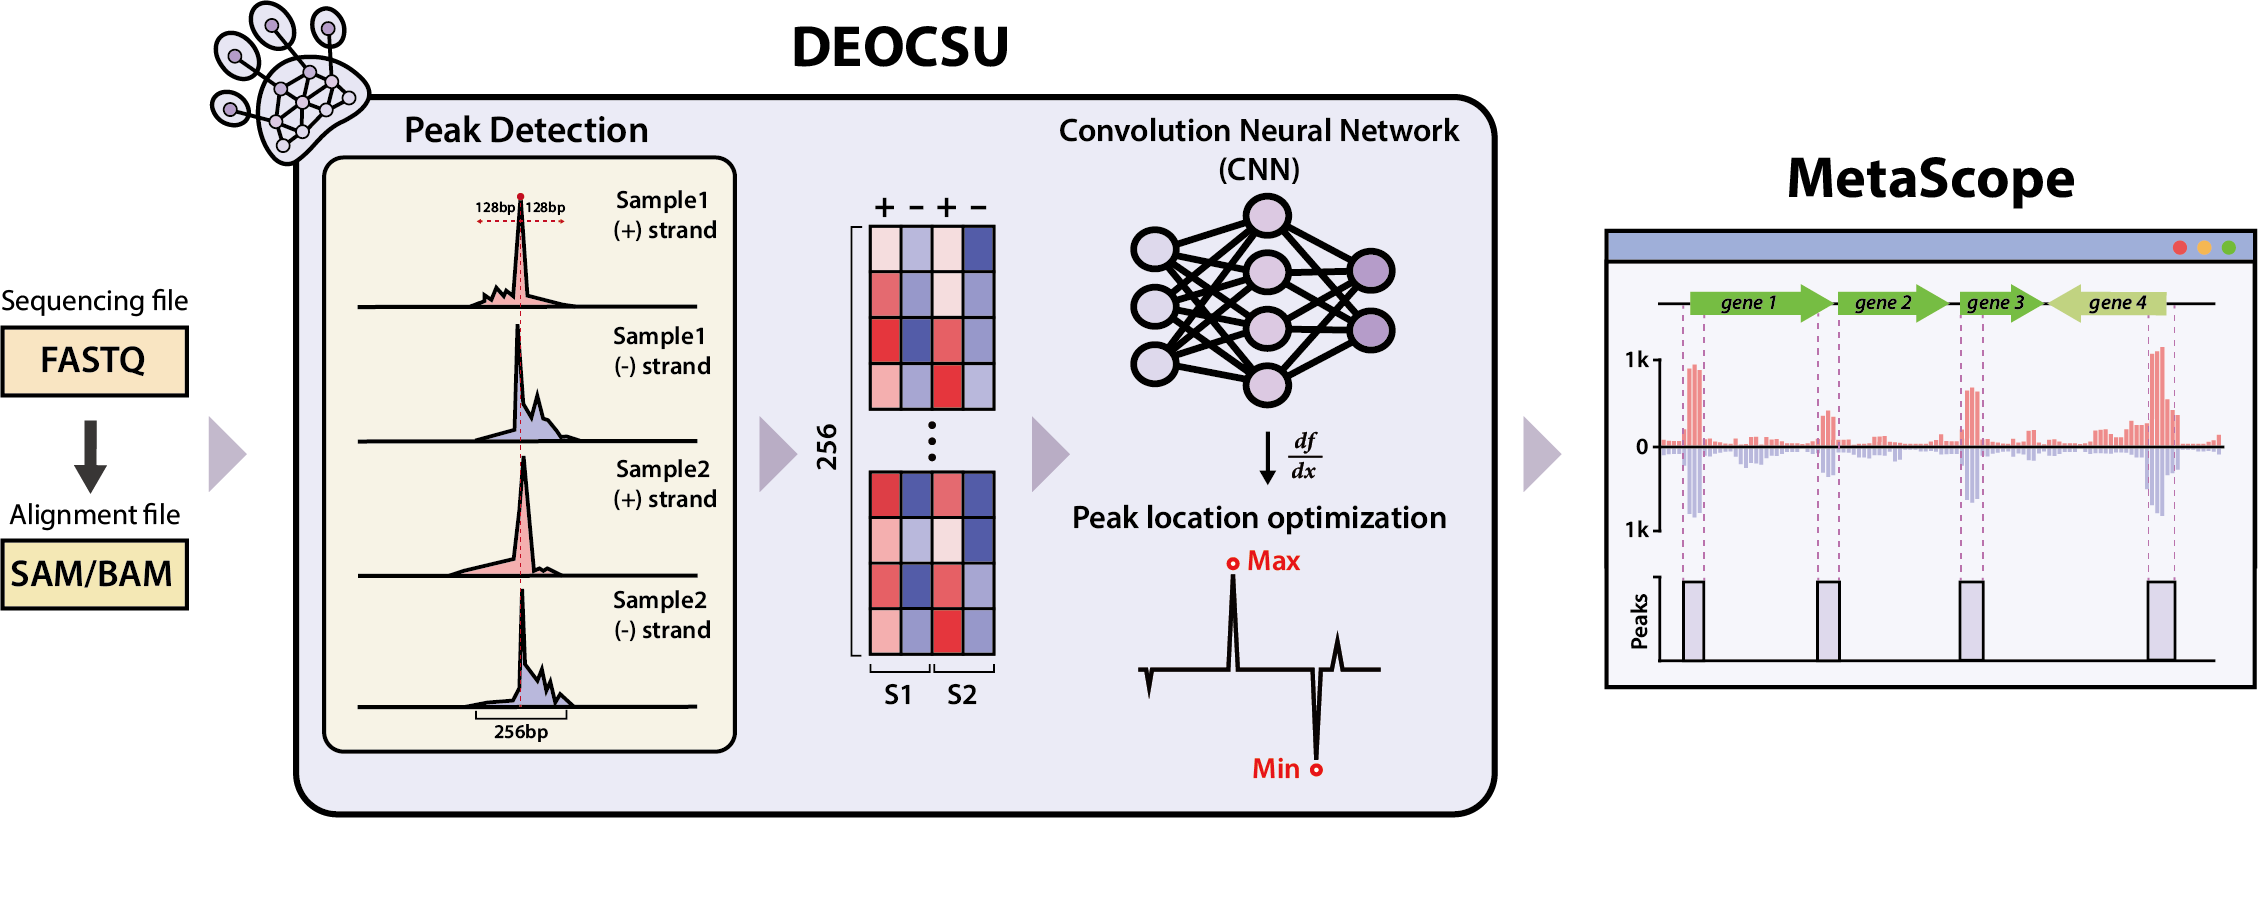 Figure 1. Overview of DEOCSU